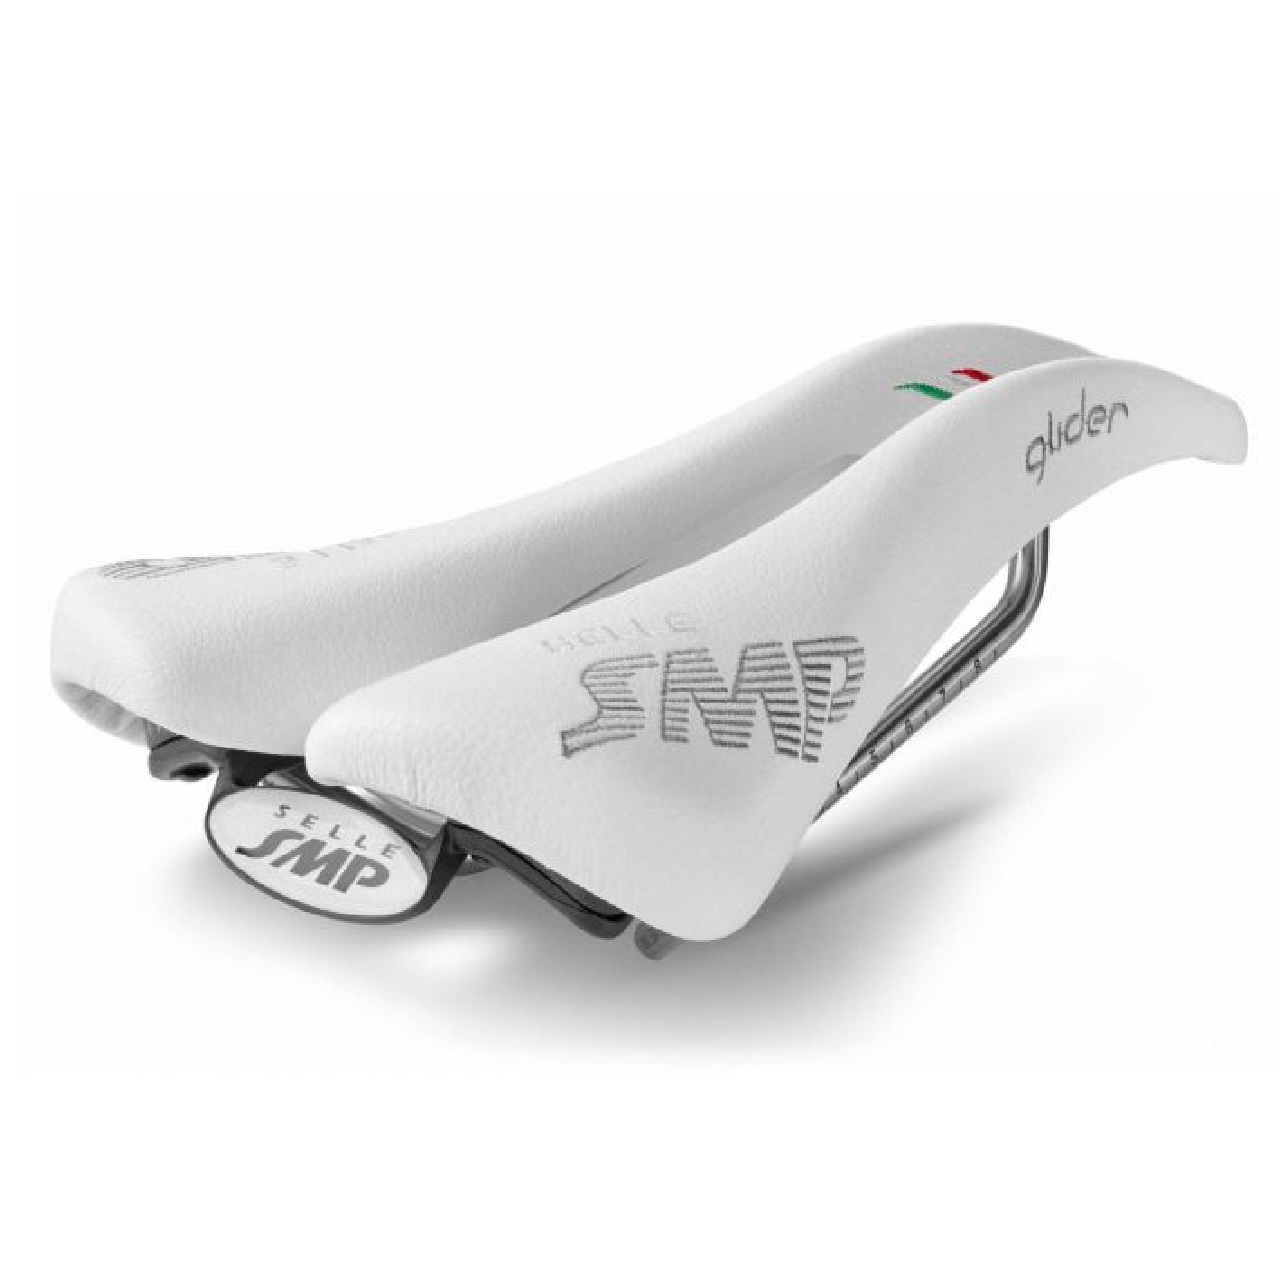 Selle SMP Glider Pro Bike Saddle Bike Seat White